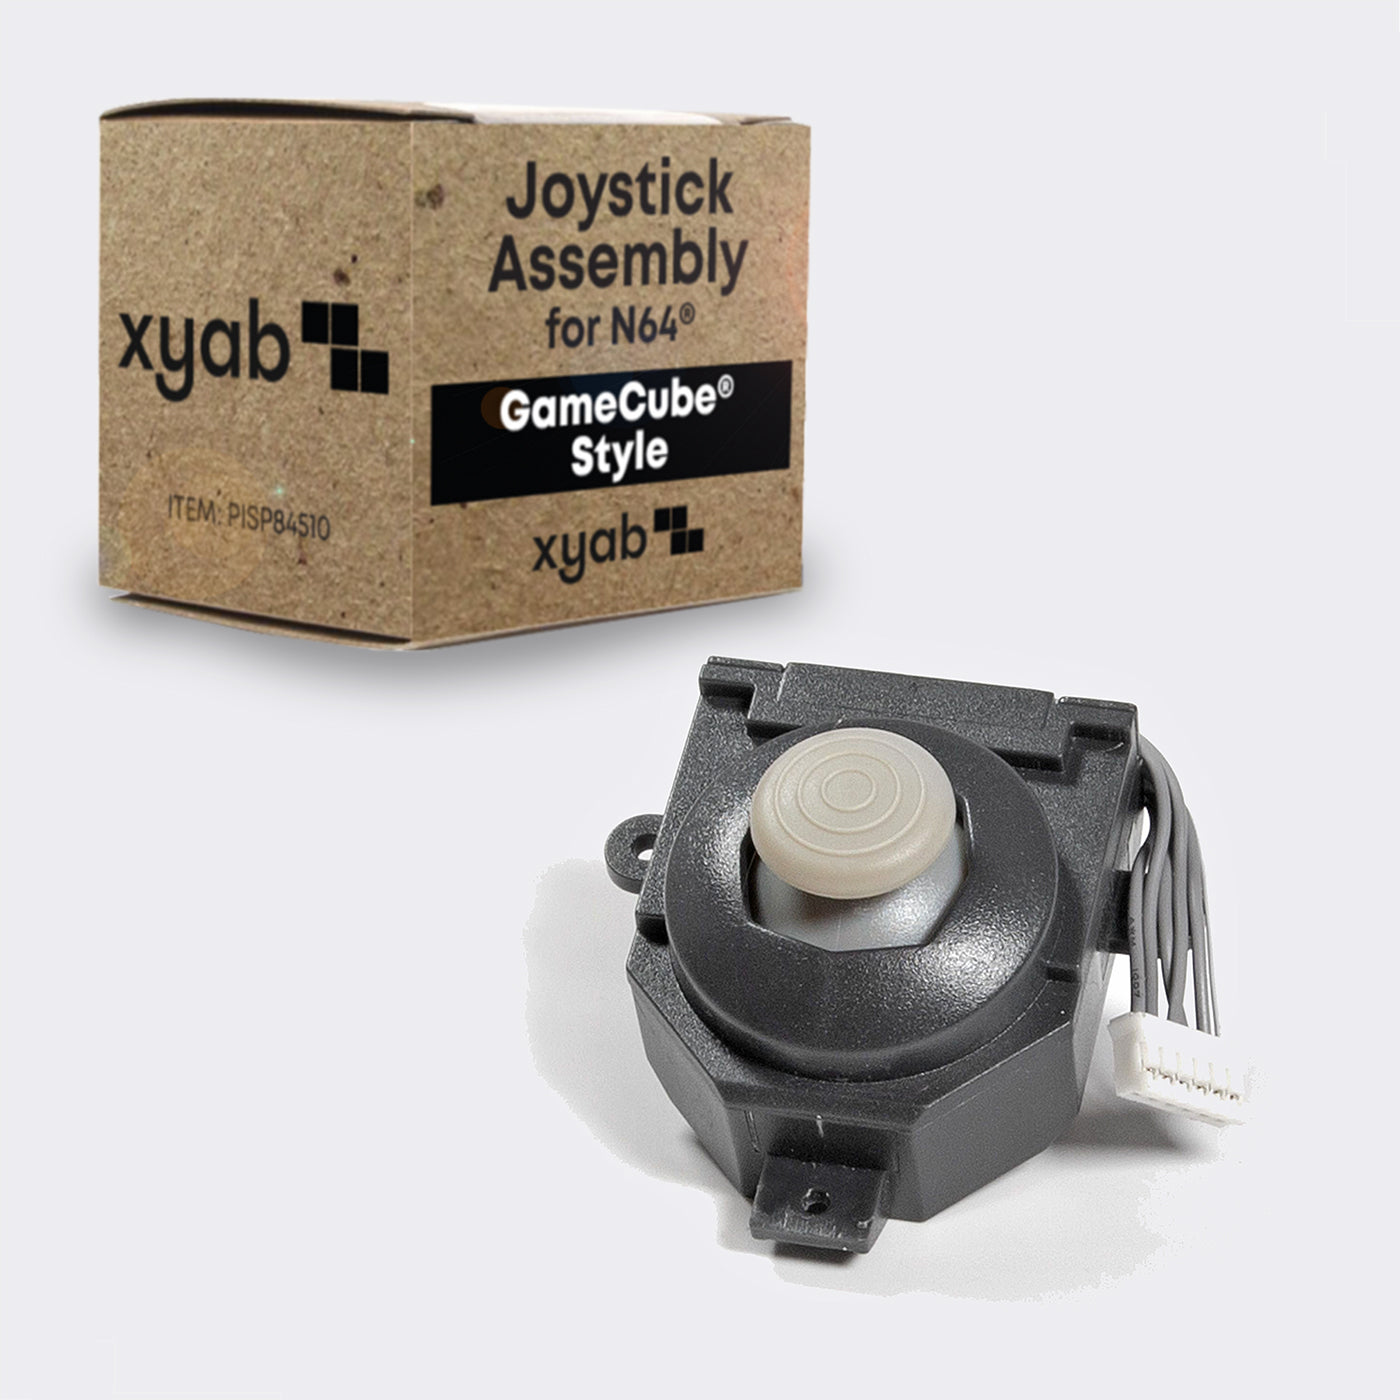 Joystick Assembly - Style of GameCube®